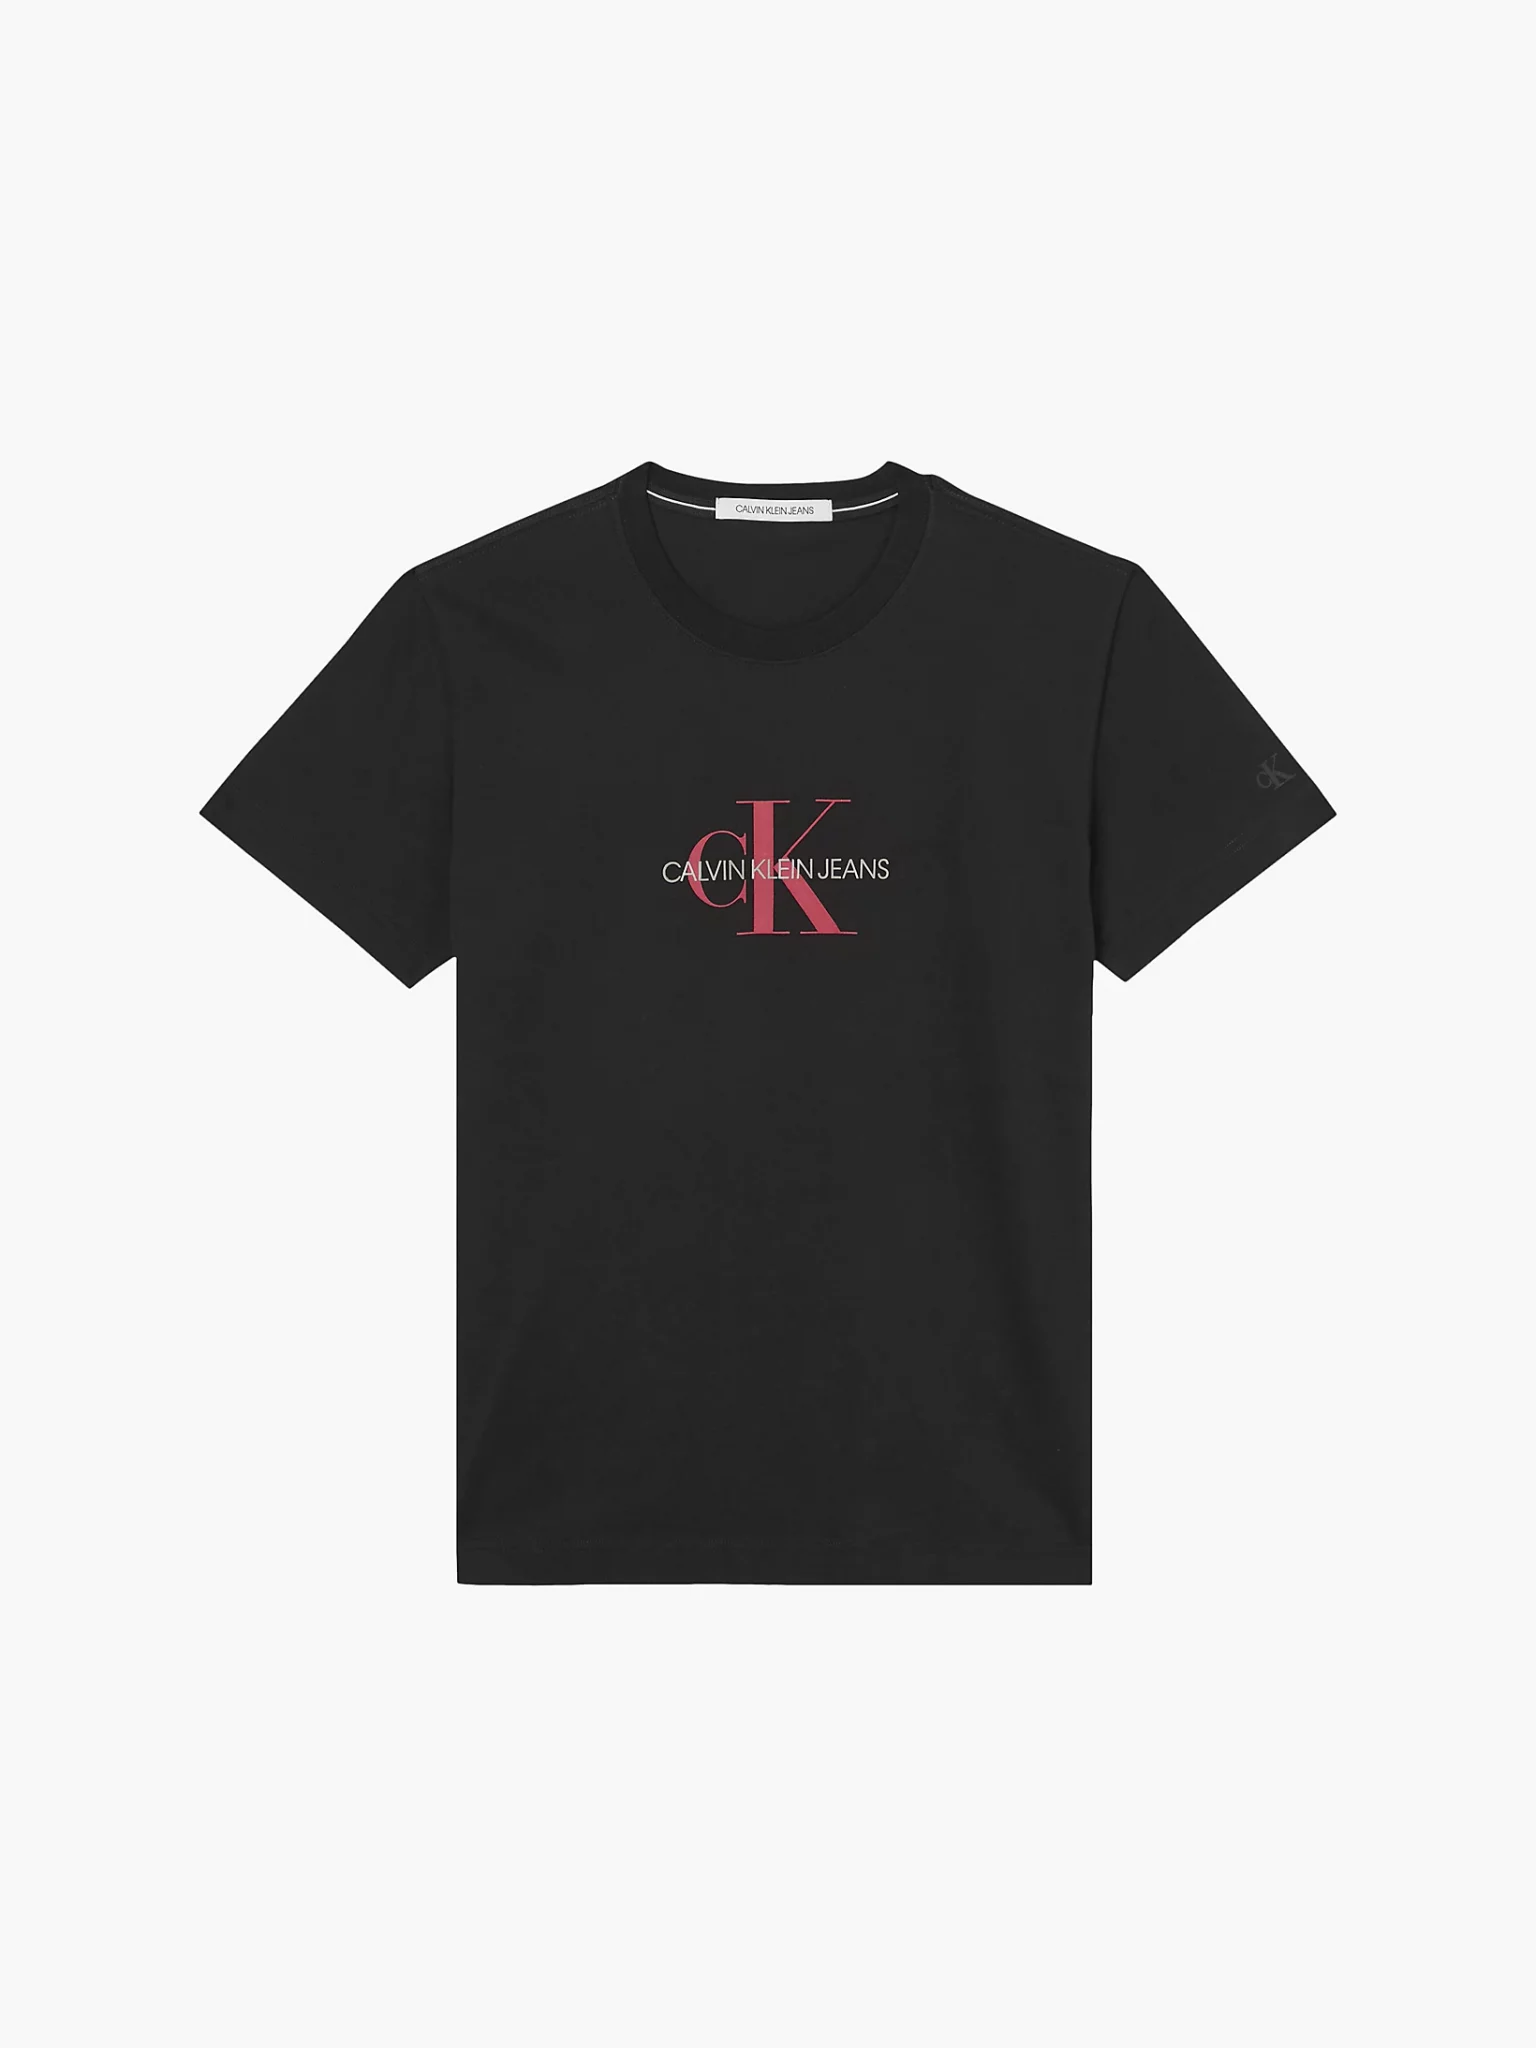 Buy - Klein Scandinavian Fashion Black/Salsa T-shirt Archival Store Monogram Calvin